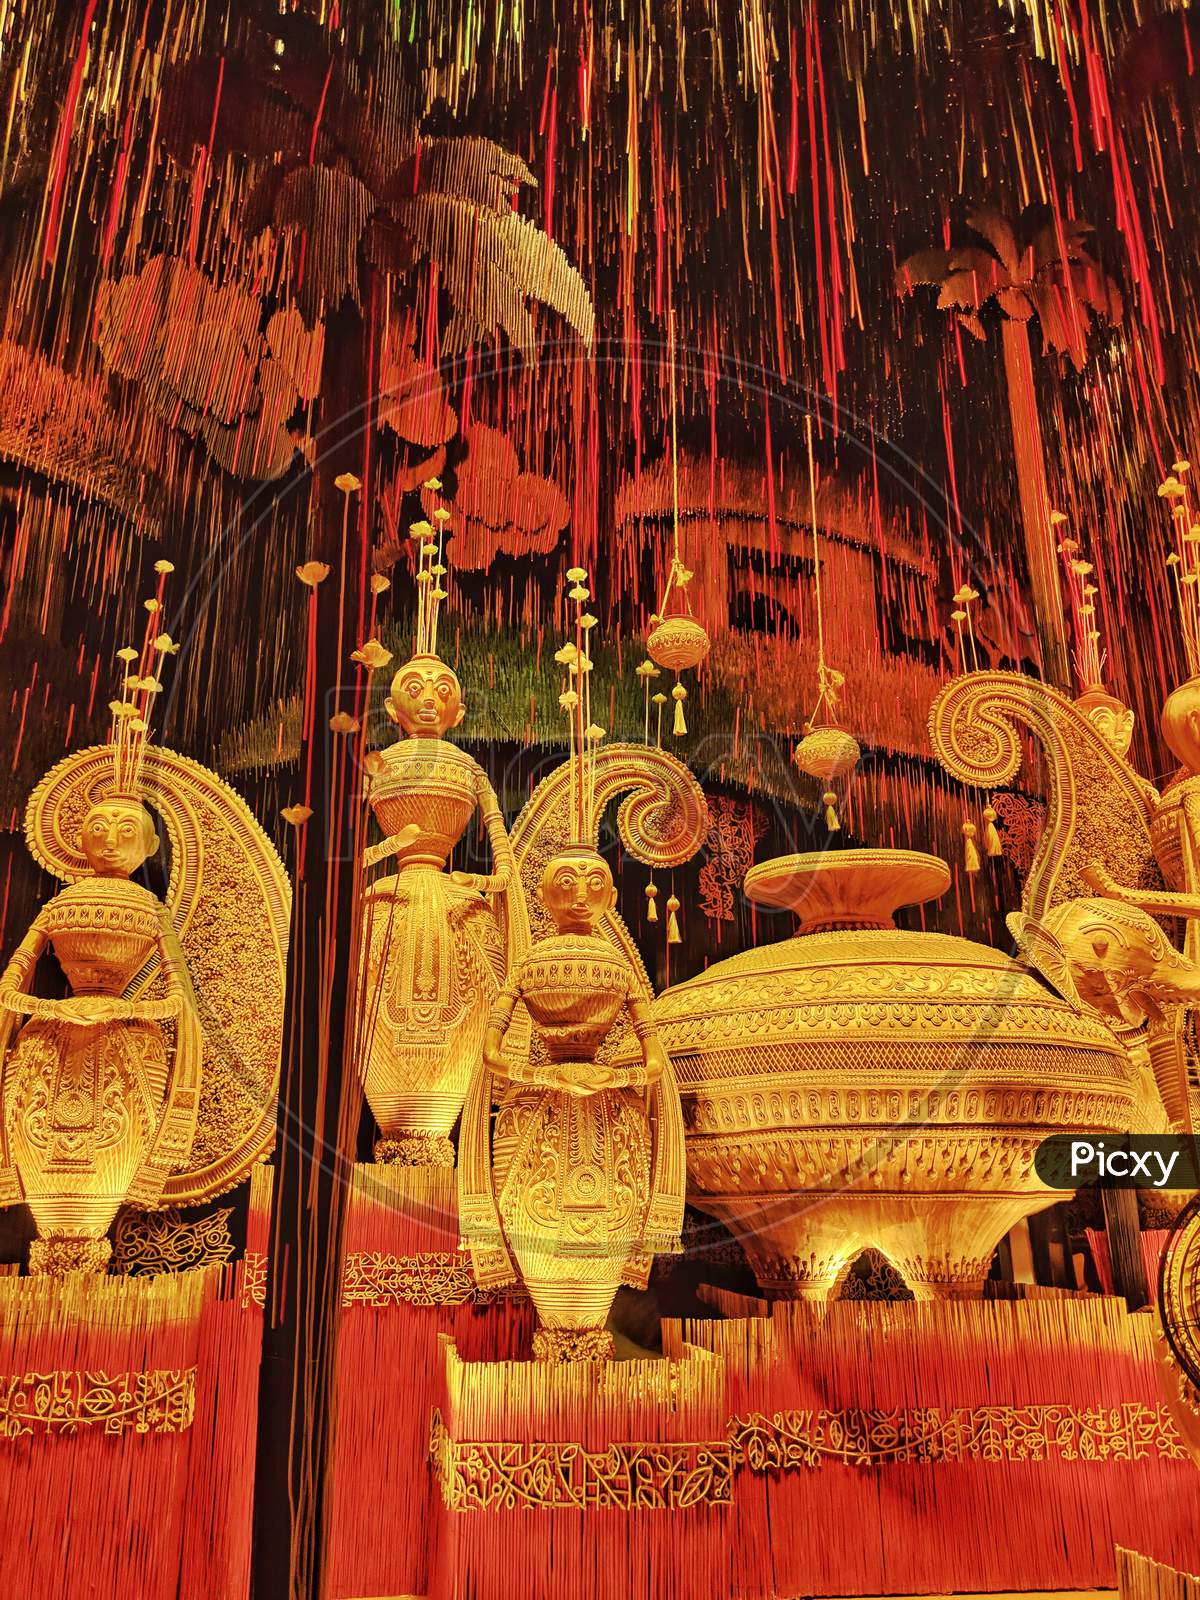 Art of pandals in Kolkata Durga puja, The biggest festival in India, Light work of kolkata durga puja, Vibrant light decoration & creative art work in Durga festival